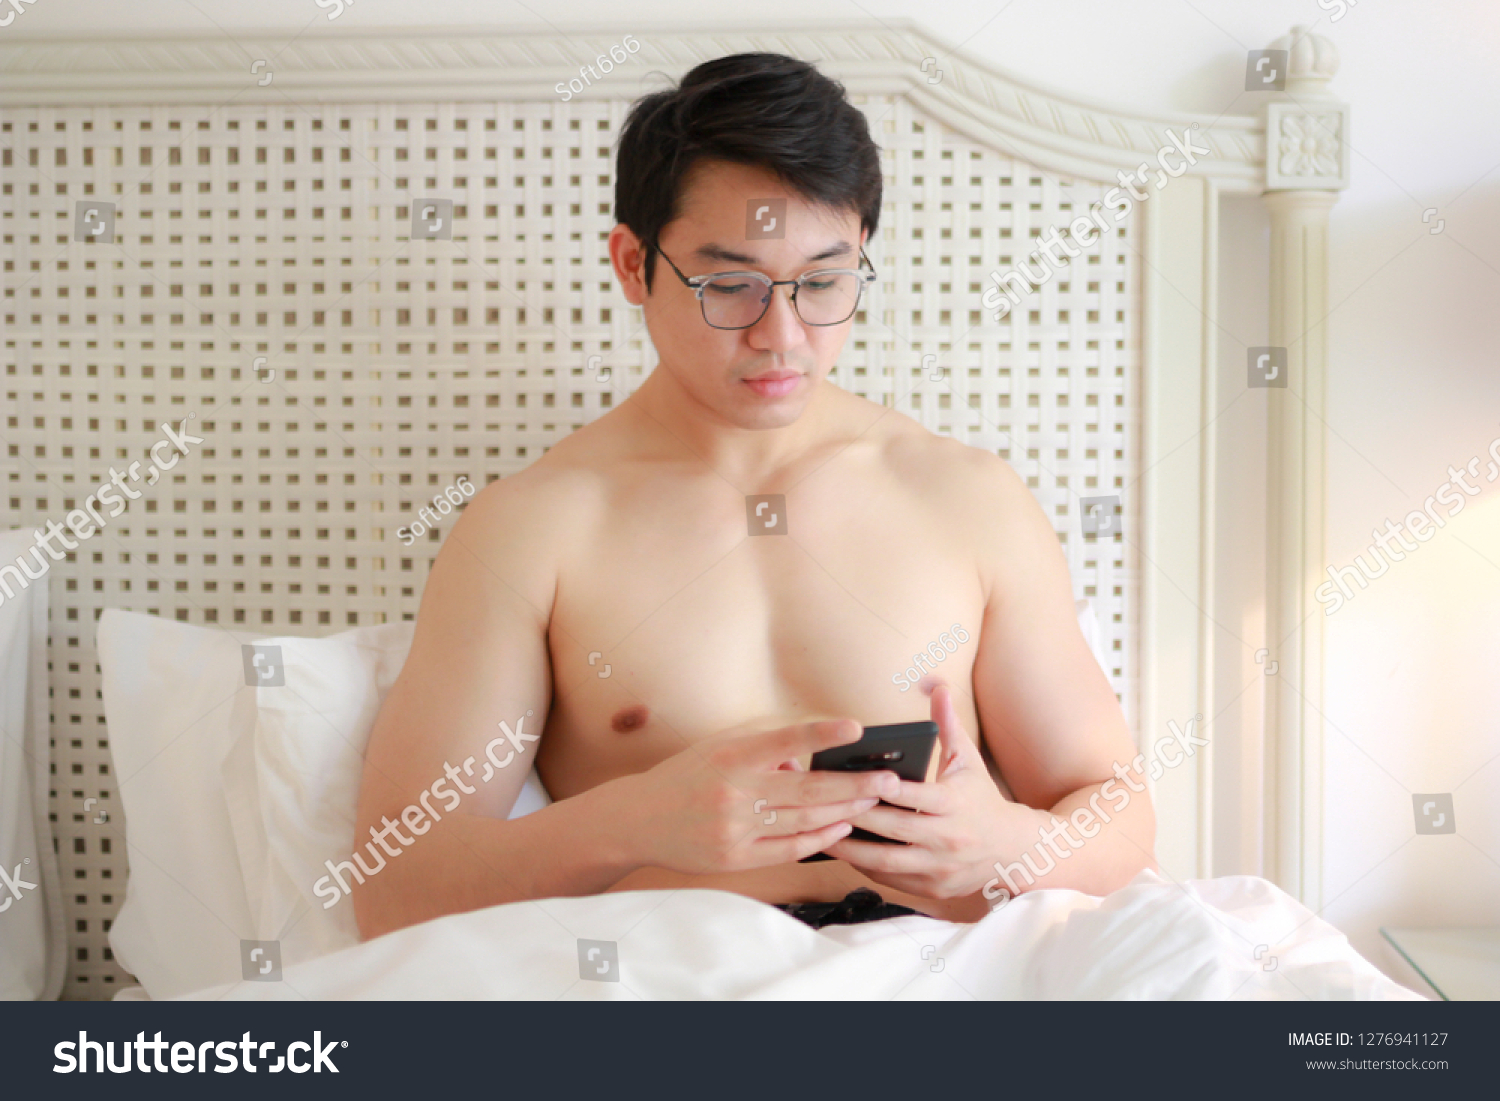 Naked Asian Men Pics